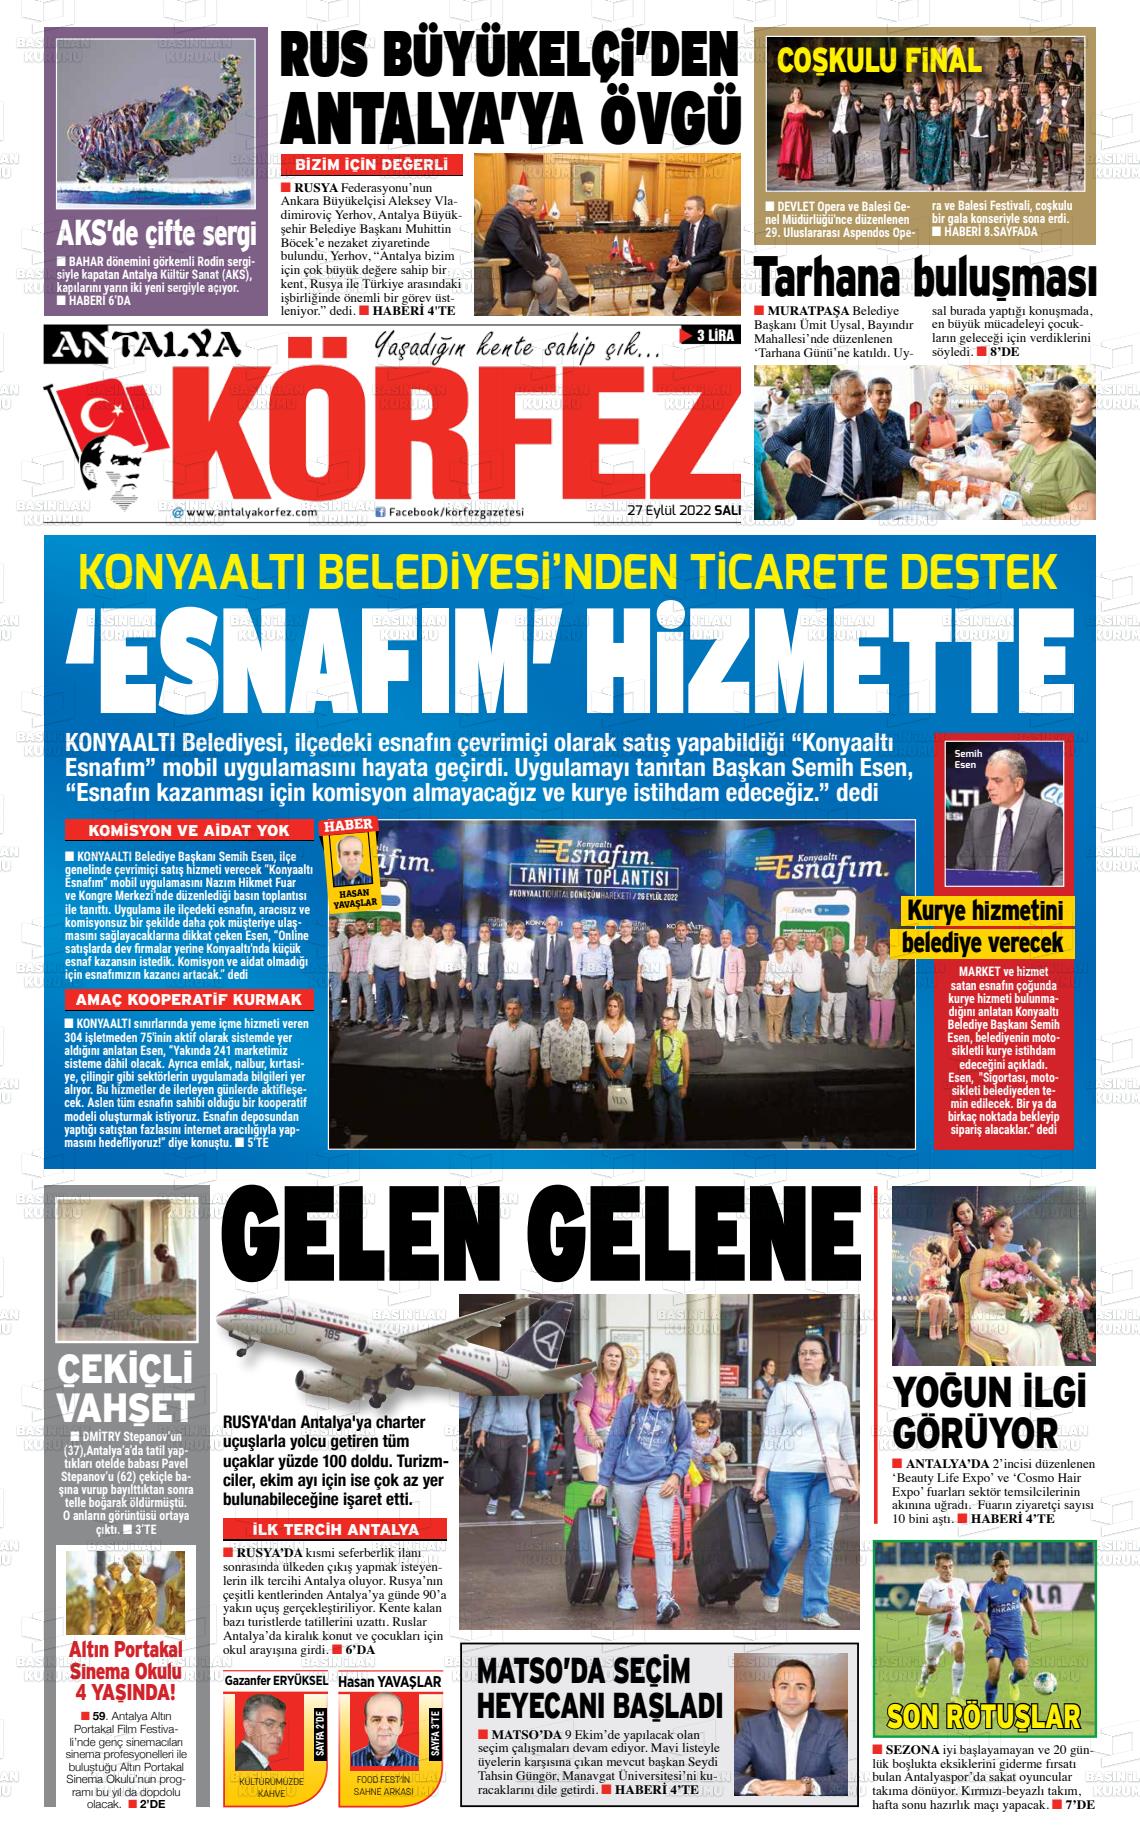 27 Eylül 2022 Antalya Körfez Gazete Manşeti